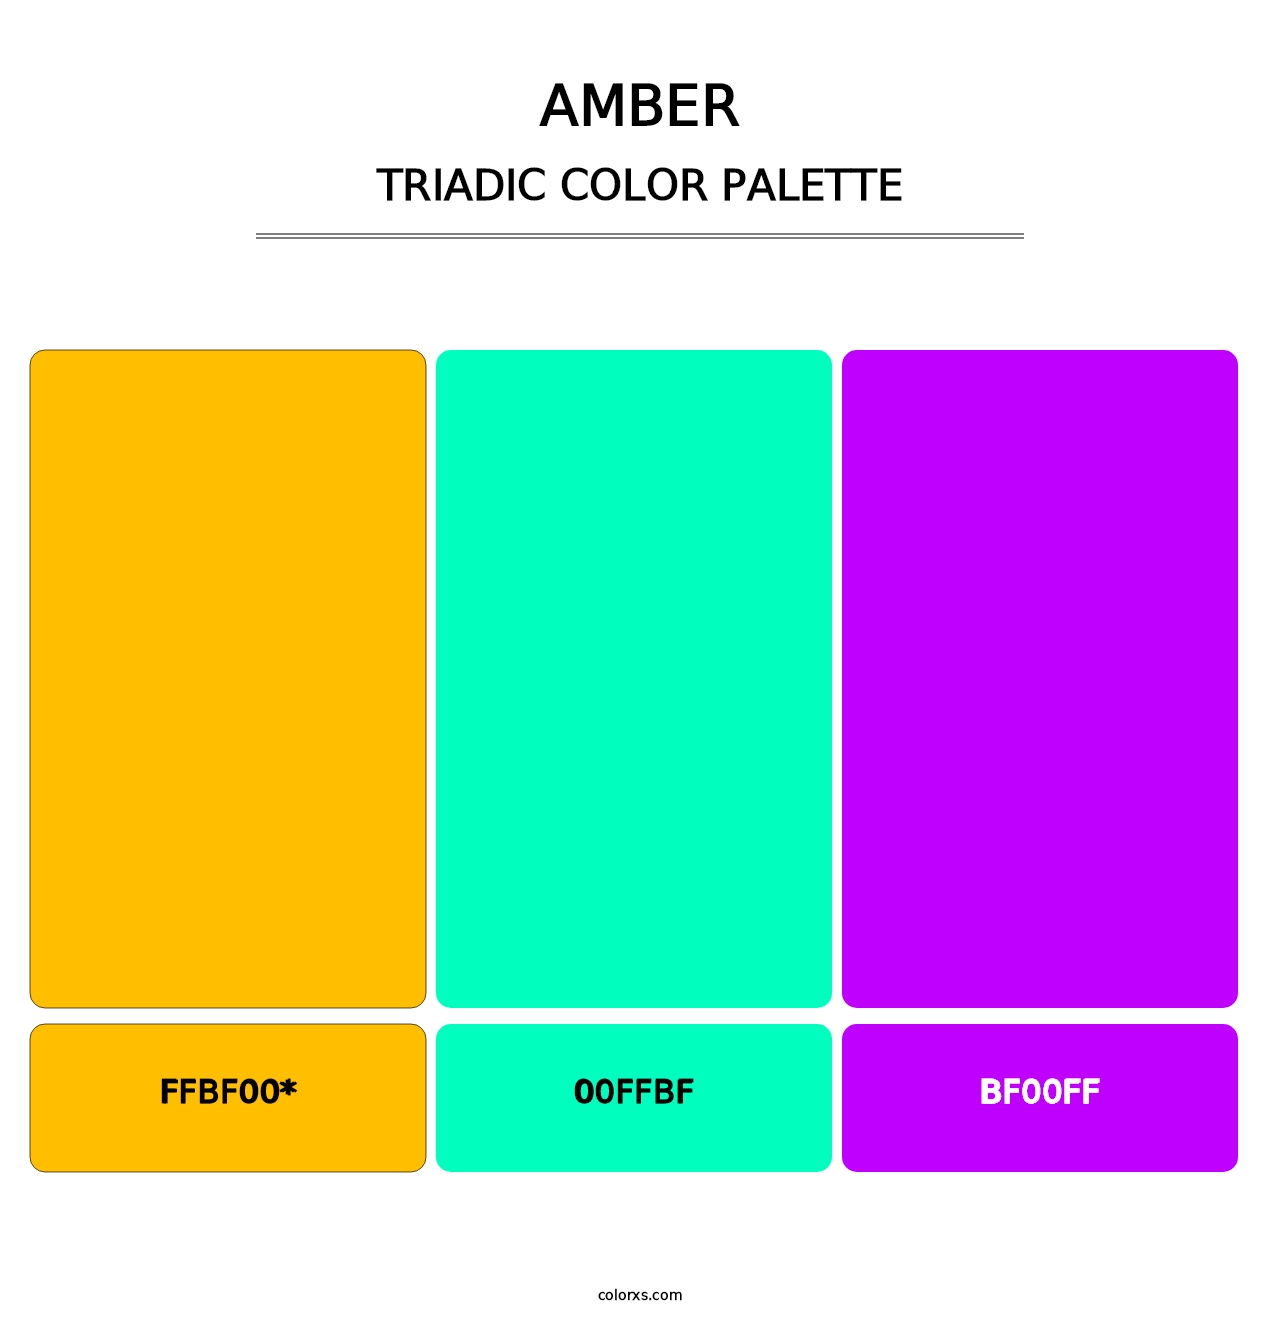 Amber - Triadic Color Palette